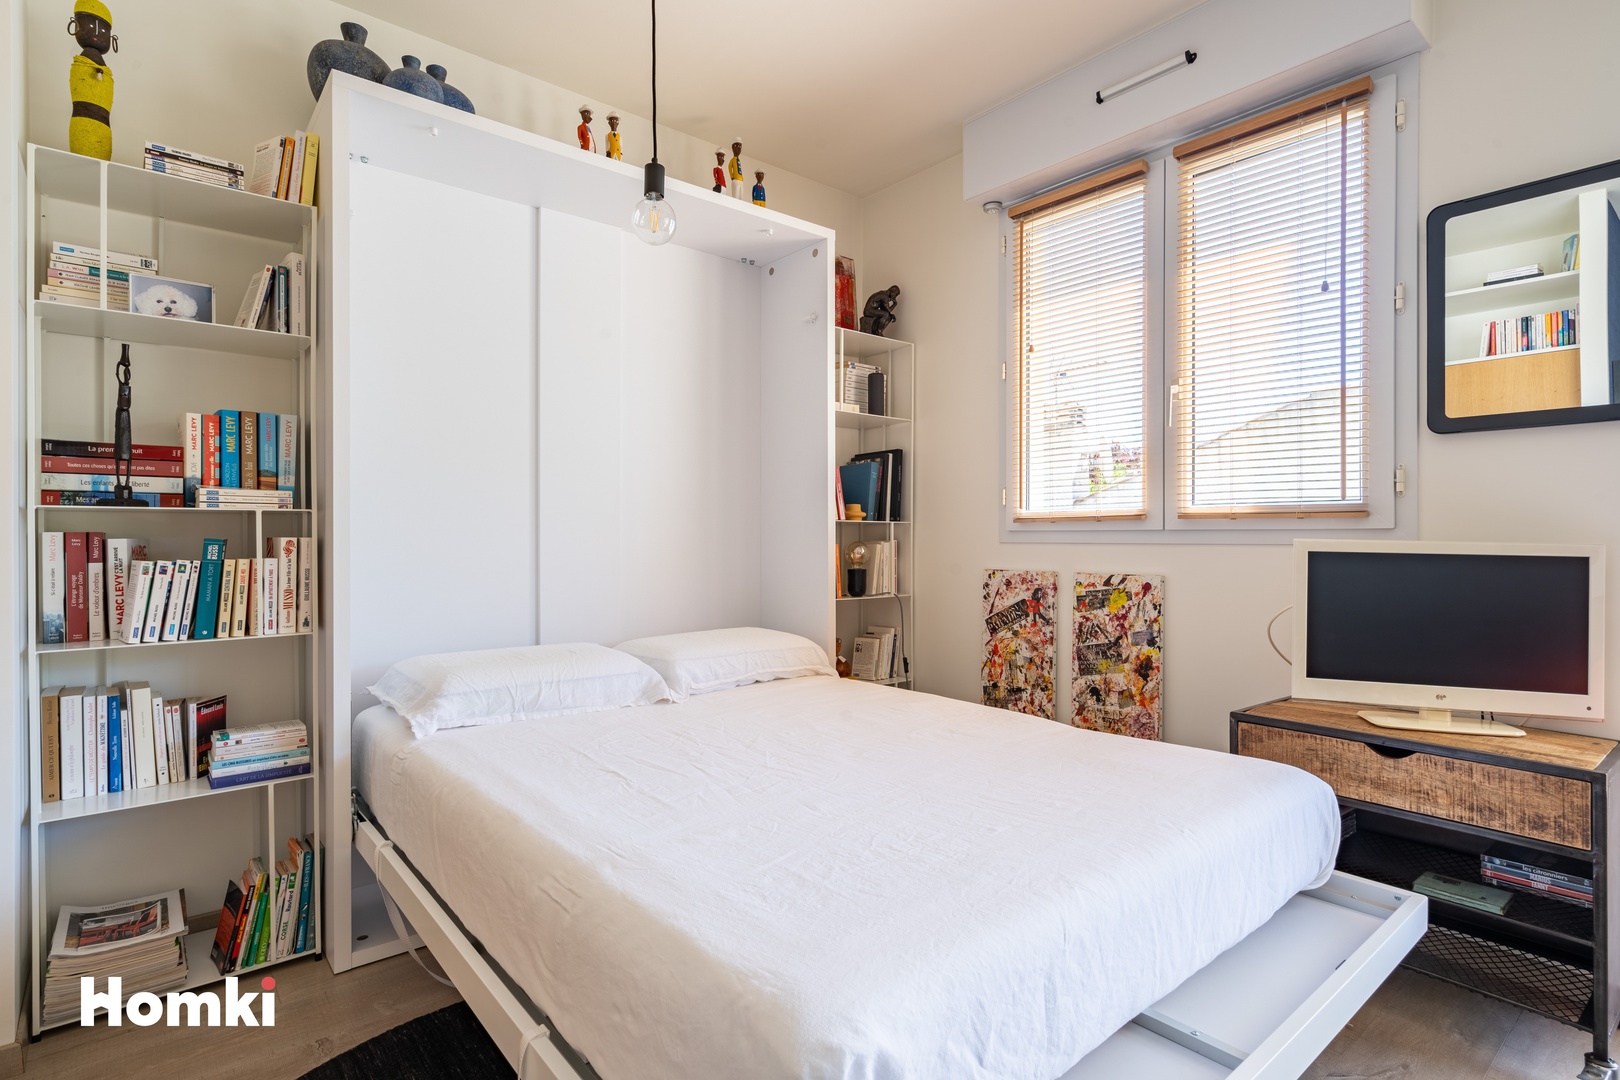 Homki - Vente Appartement  de 30.0 m² à Biarritz 64200